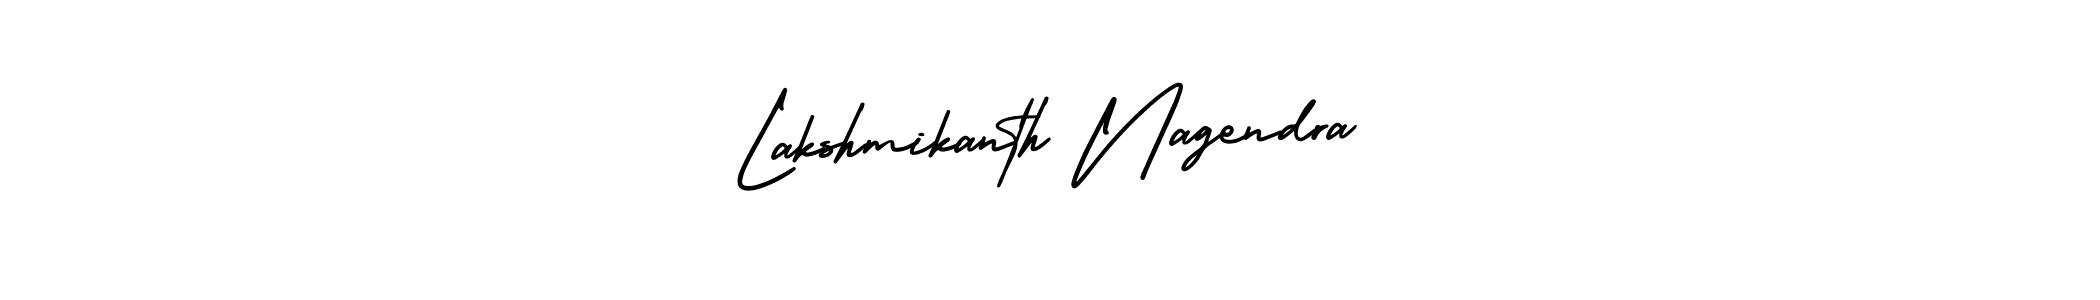 Best and Professional Signature Style for Lakshmikanth Nagendra. AmerikaSignatureDemo-Regular Best Signature Style Collection. Lakshmikanth Nagendra signature style 3 images and pictures png